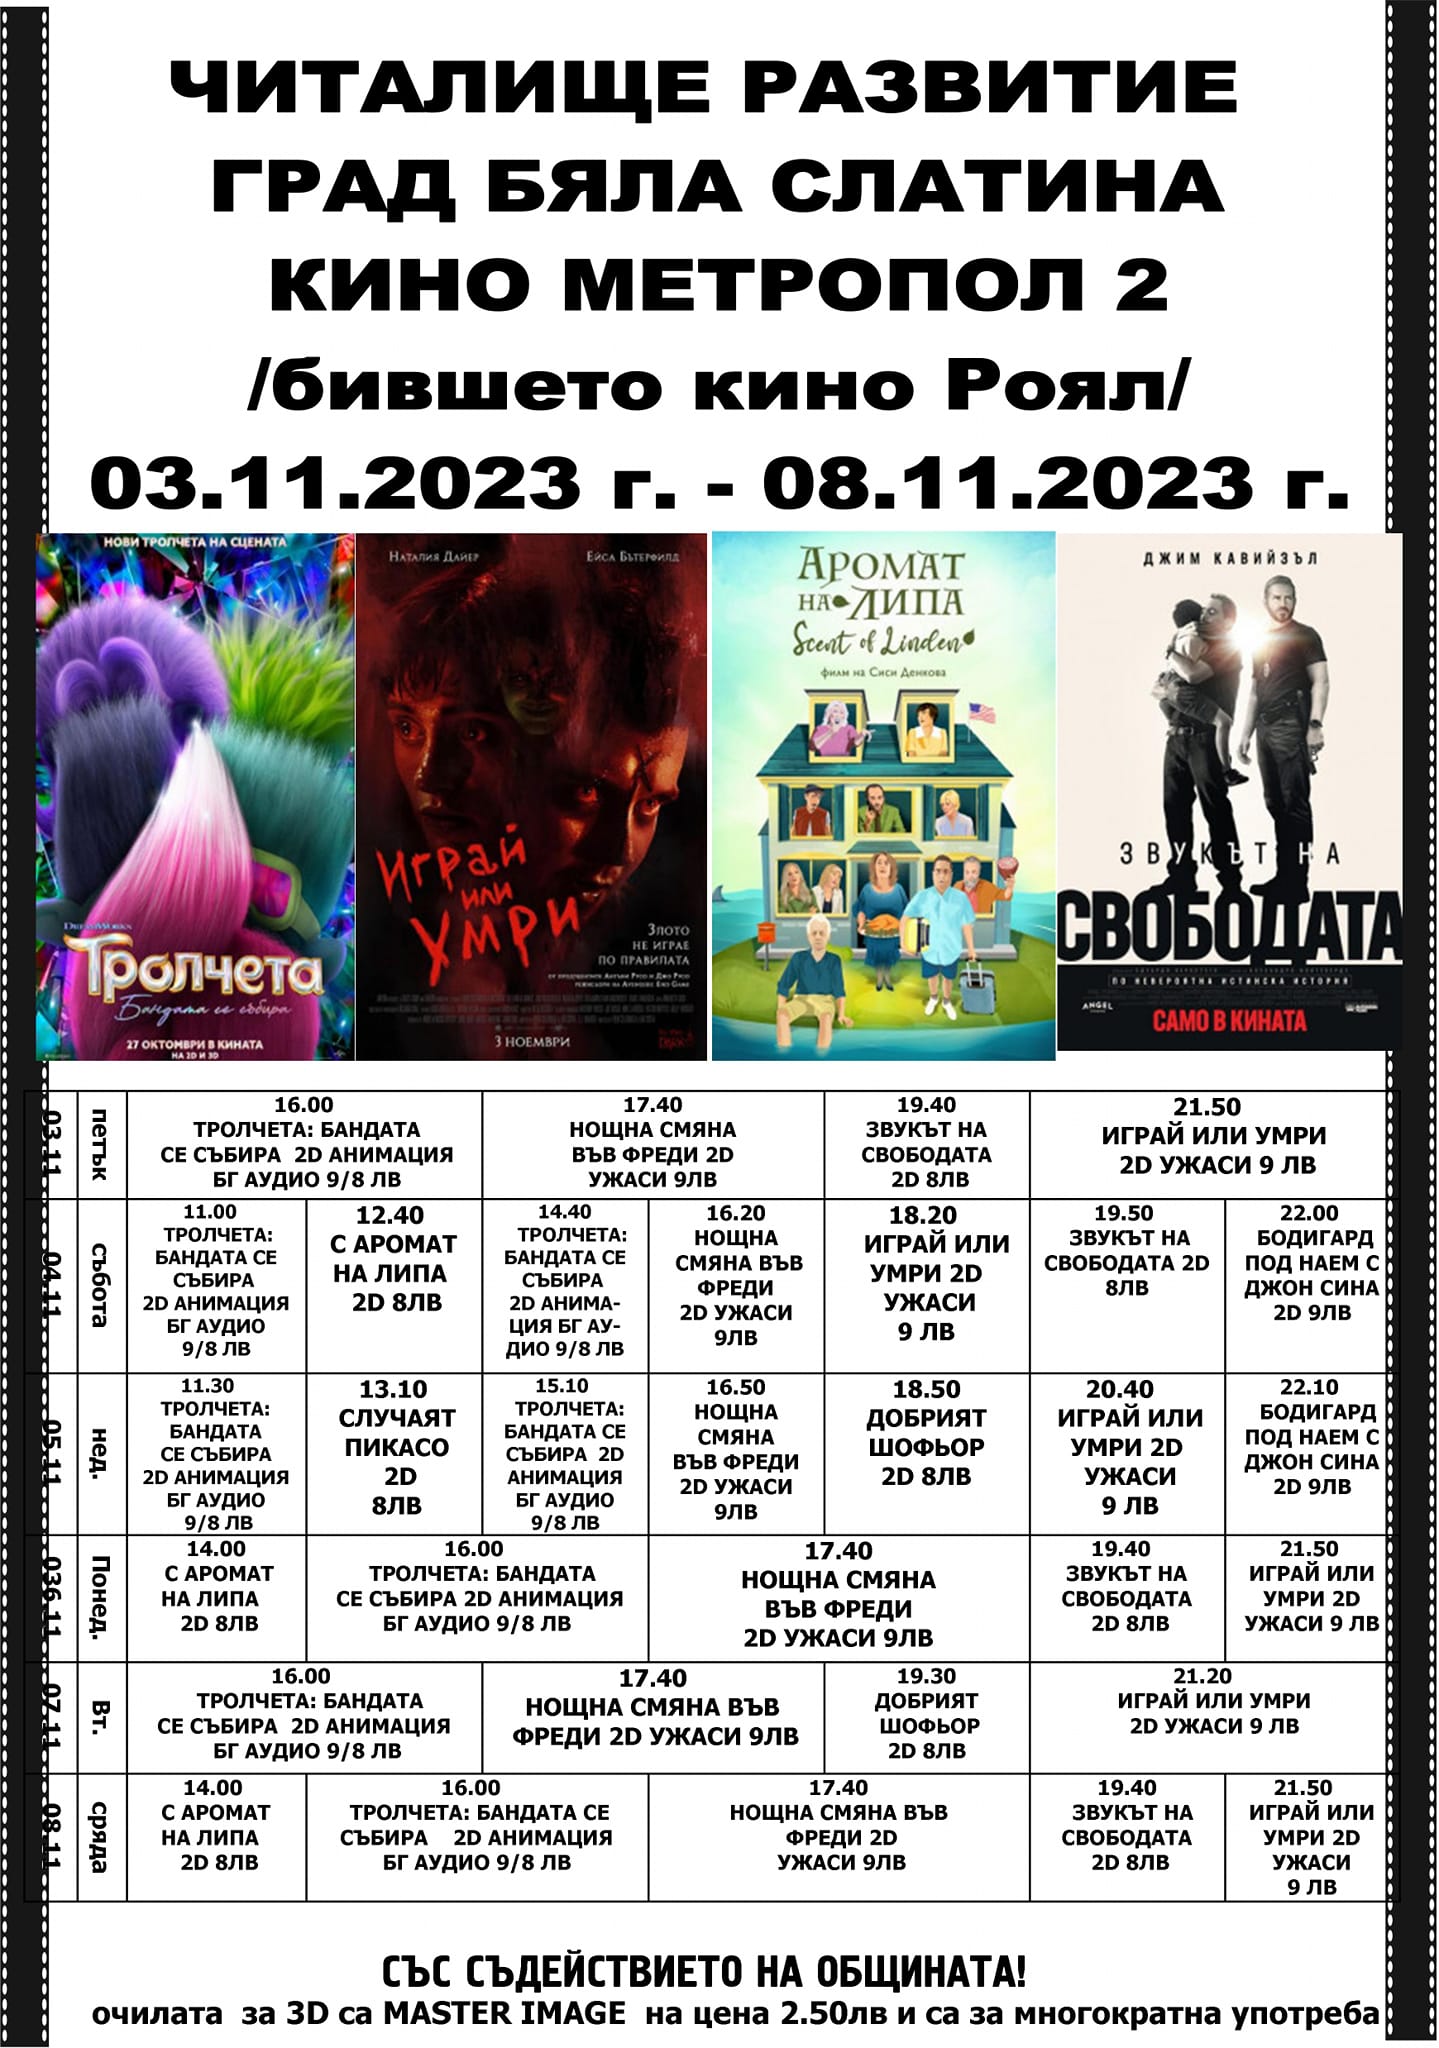 Кино Метропол Бяла Слатина: Кино програма за периода от 03.11-09.11.2023